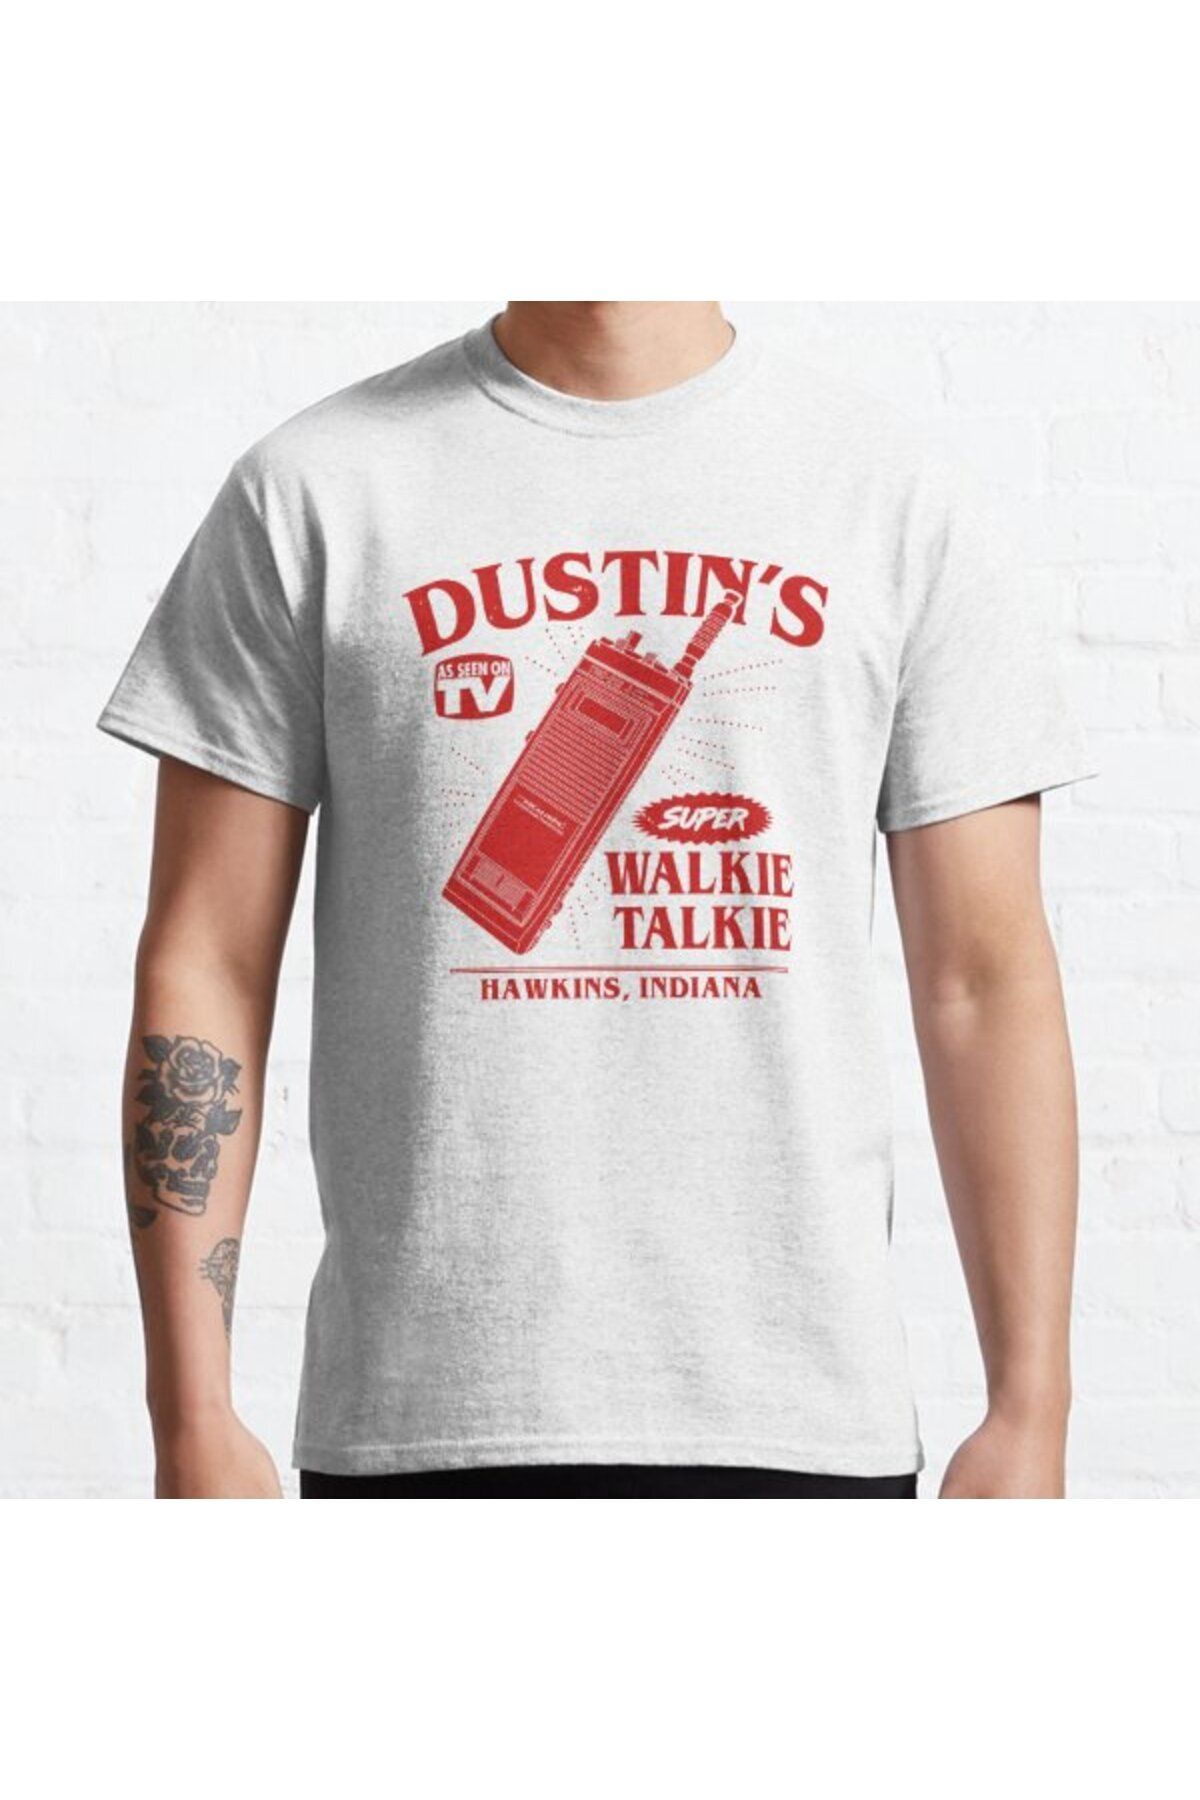 ZOKAWEAR Bol Kalıp Unisex Dustin's Super Walkie Talkie 80's Lover Gadget Tech Tasarım Baskılı Tshirt